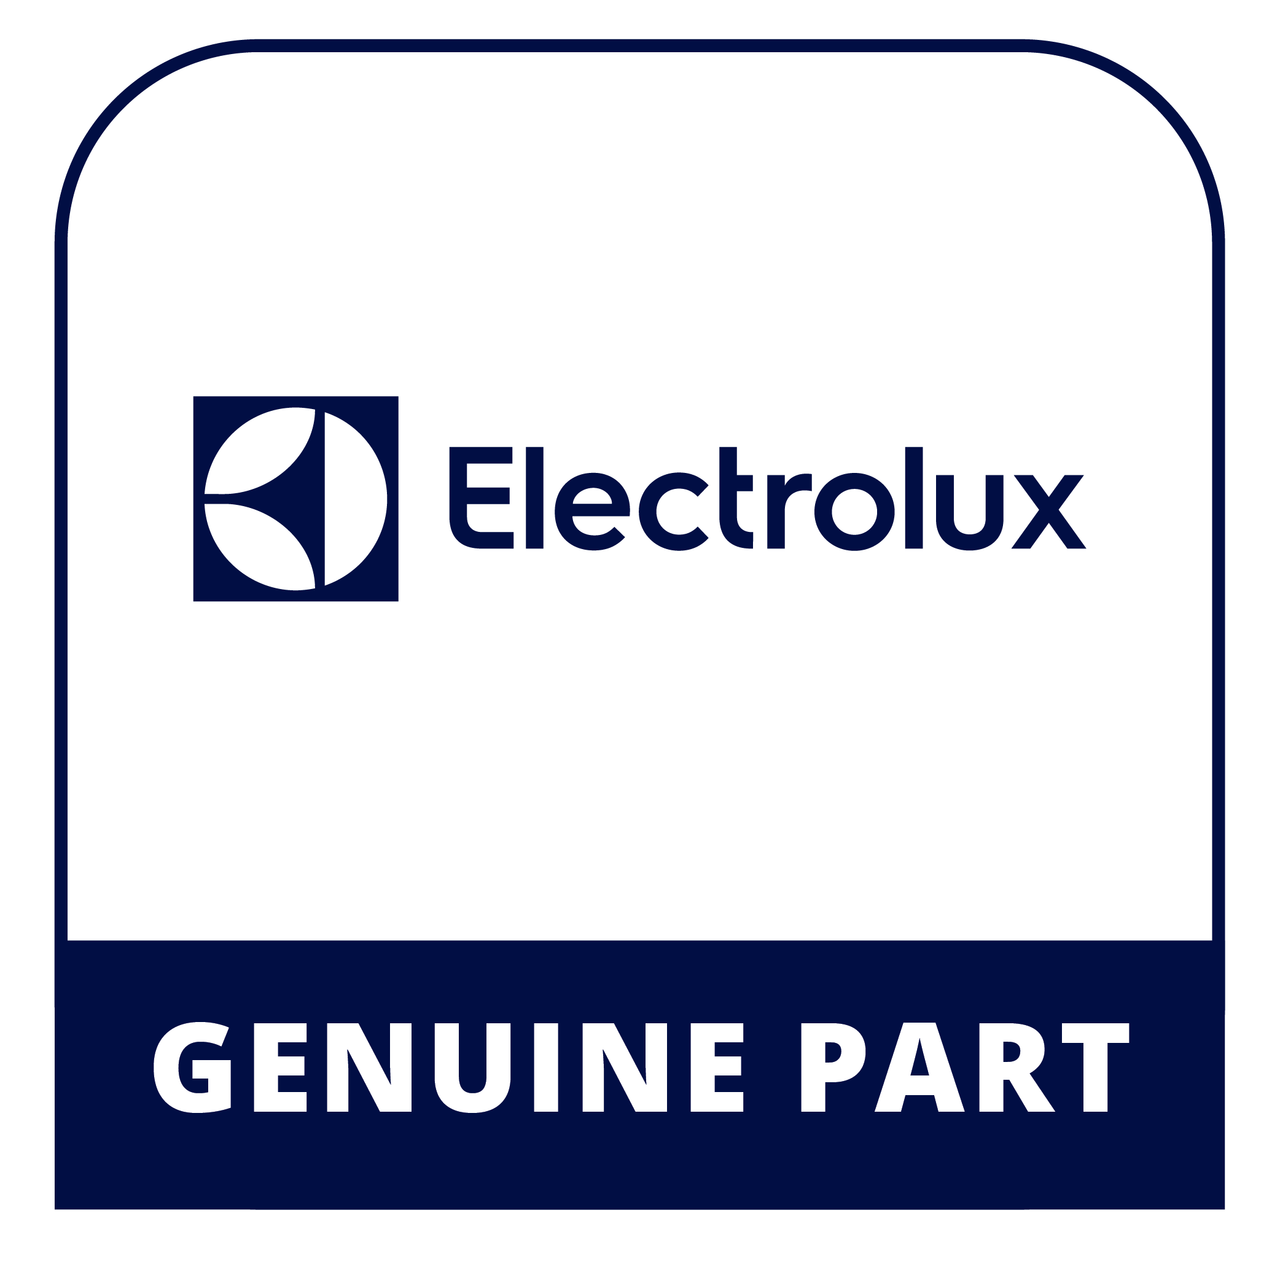 Frigidaire - Electrolux 316605340 Panel - Genuine Electrolux Part